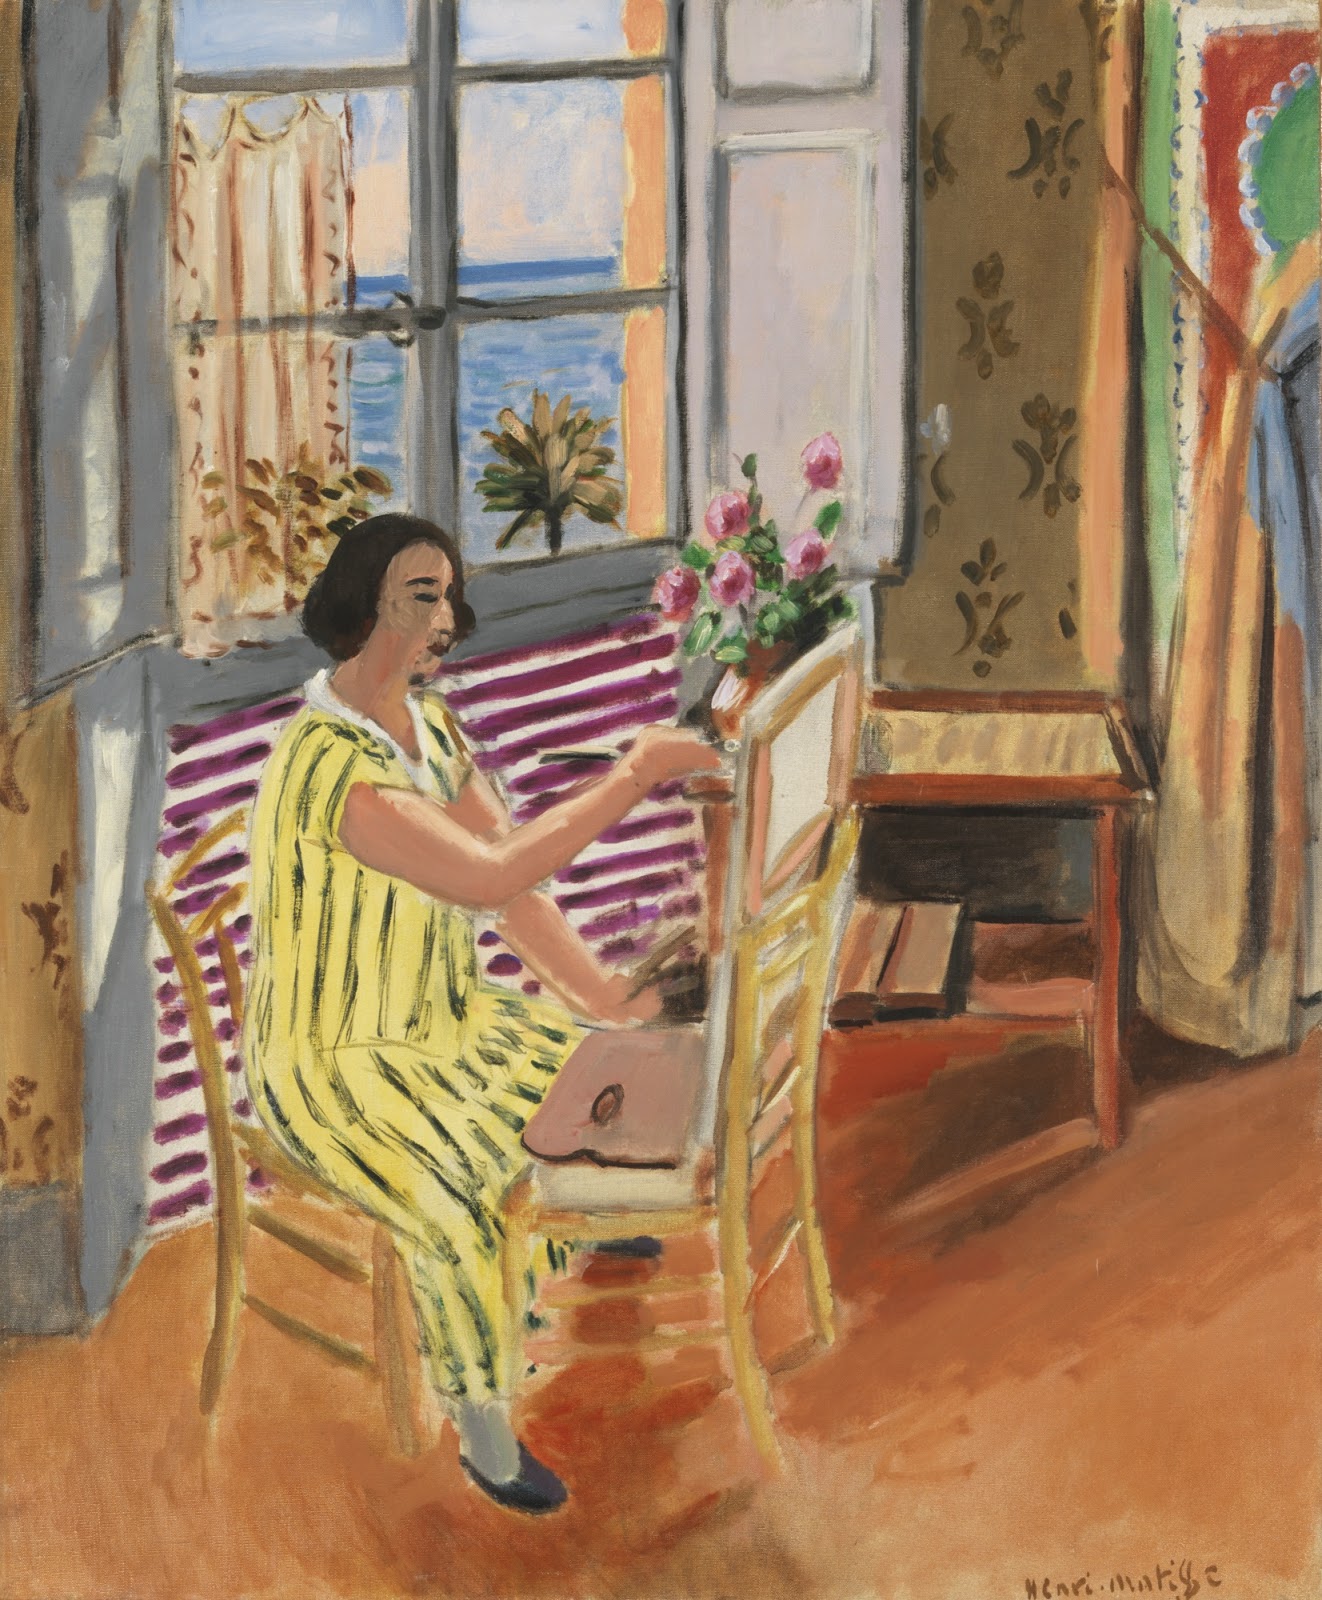 Henri+Matisse-1868-1954 (123).jpg